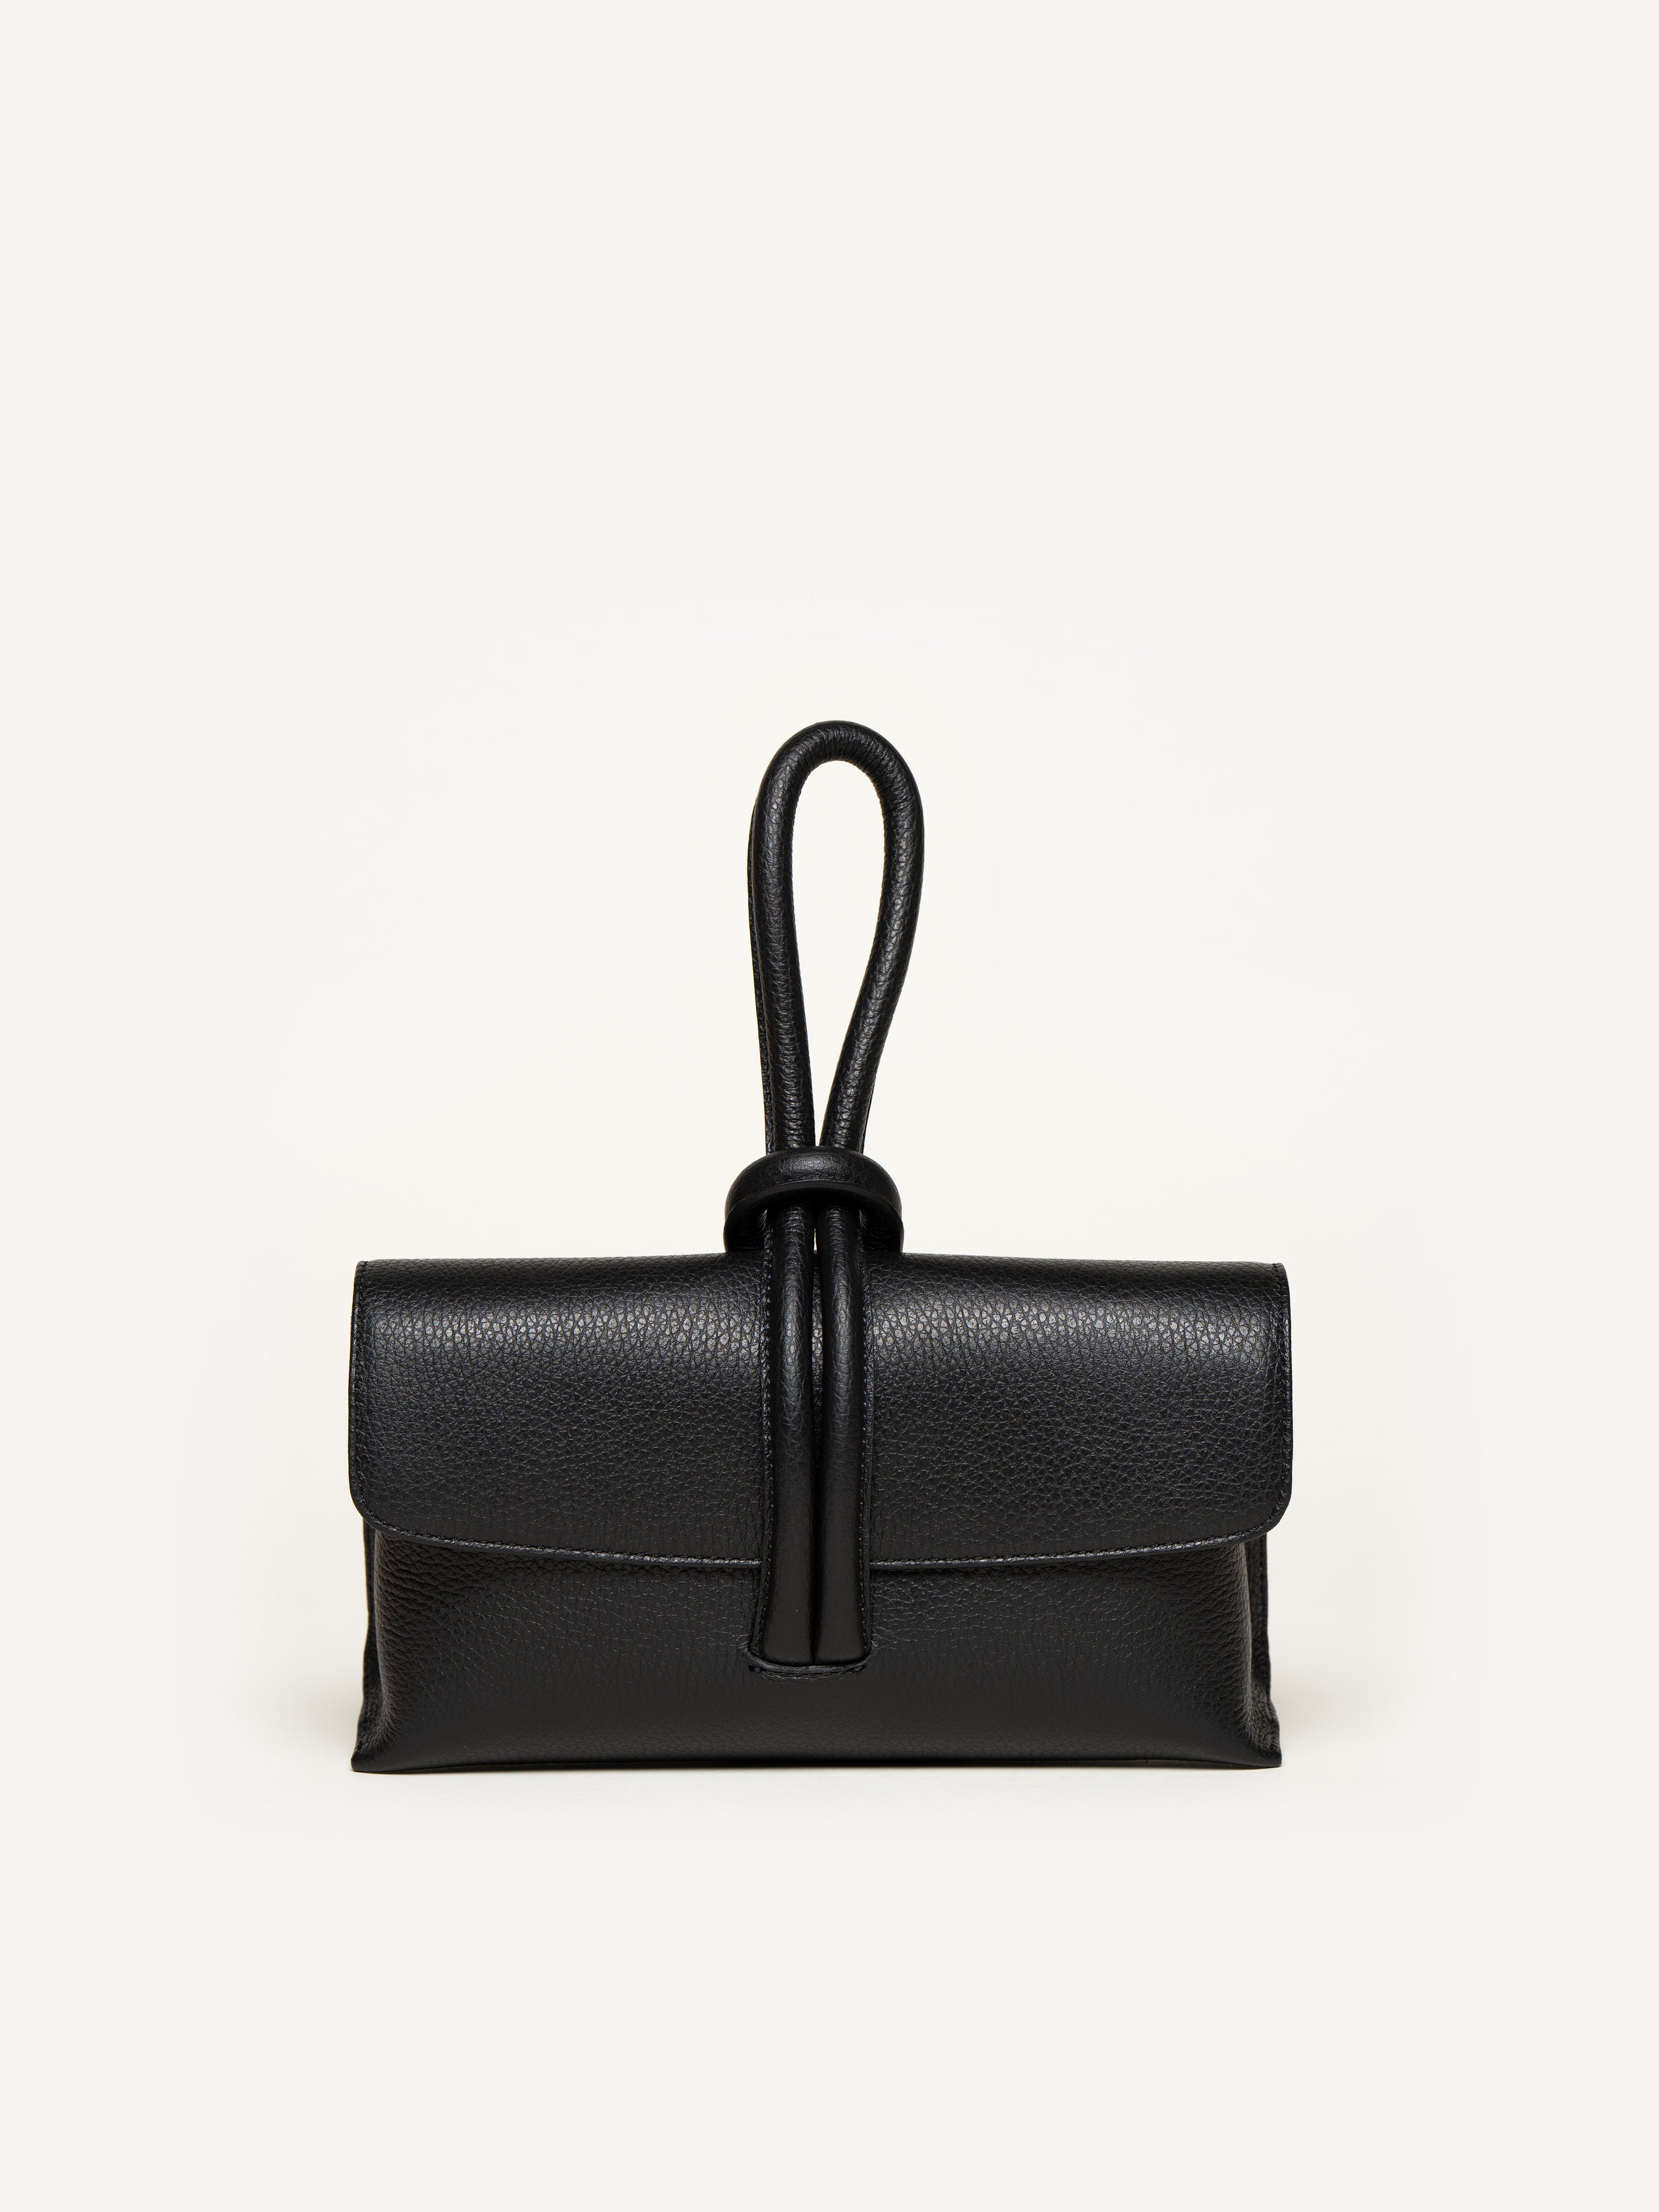 Francesca's Veronica Quilted Wallet CROSSBODY BAG PURSE Vegan leather  (Gold): Handbags: Amazon.com